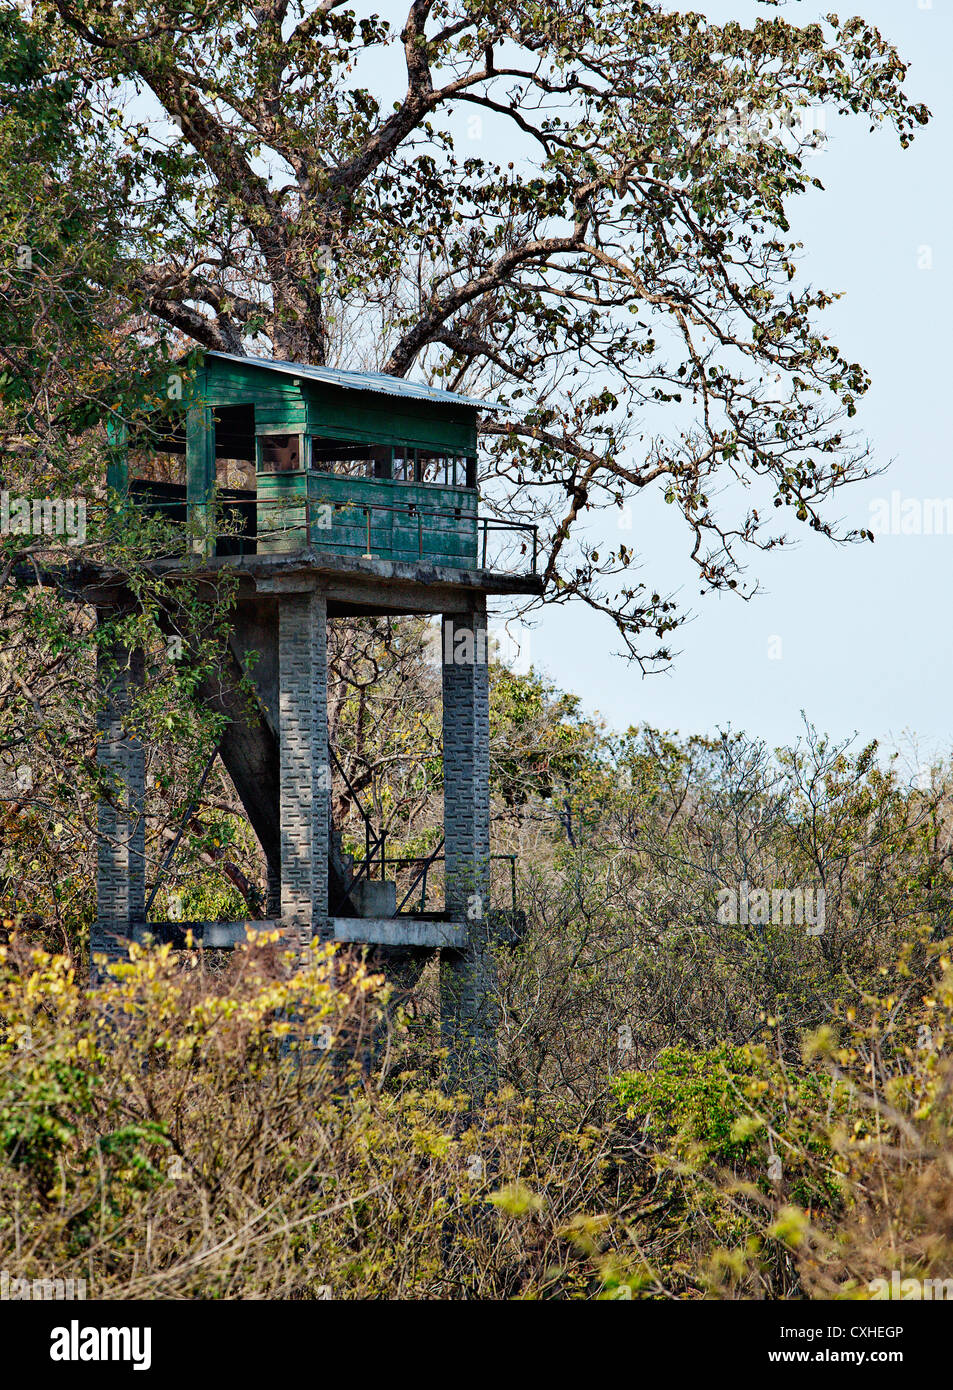 Wachturm für Tierbeobachtung in Dhikala Bereich in Jim Corbett Tiger Reserve, Indien. Stockfoto